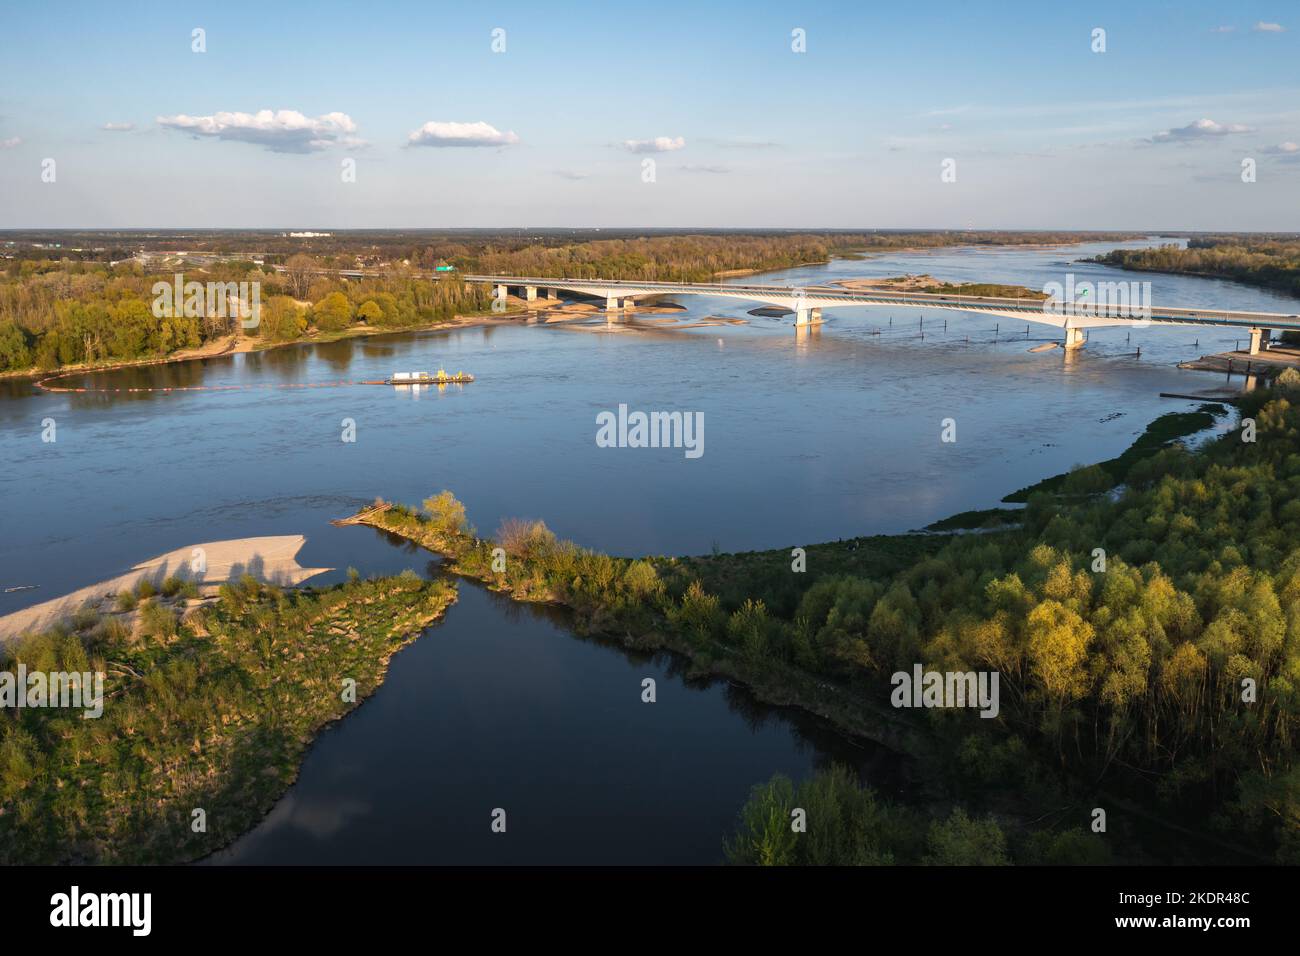 Anna Jagiellon Bridge also called South Bridge, part of S2 expressway over Vistula River in Warsaw, capital of Poland Stock Photo